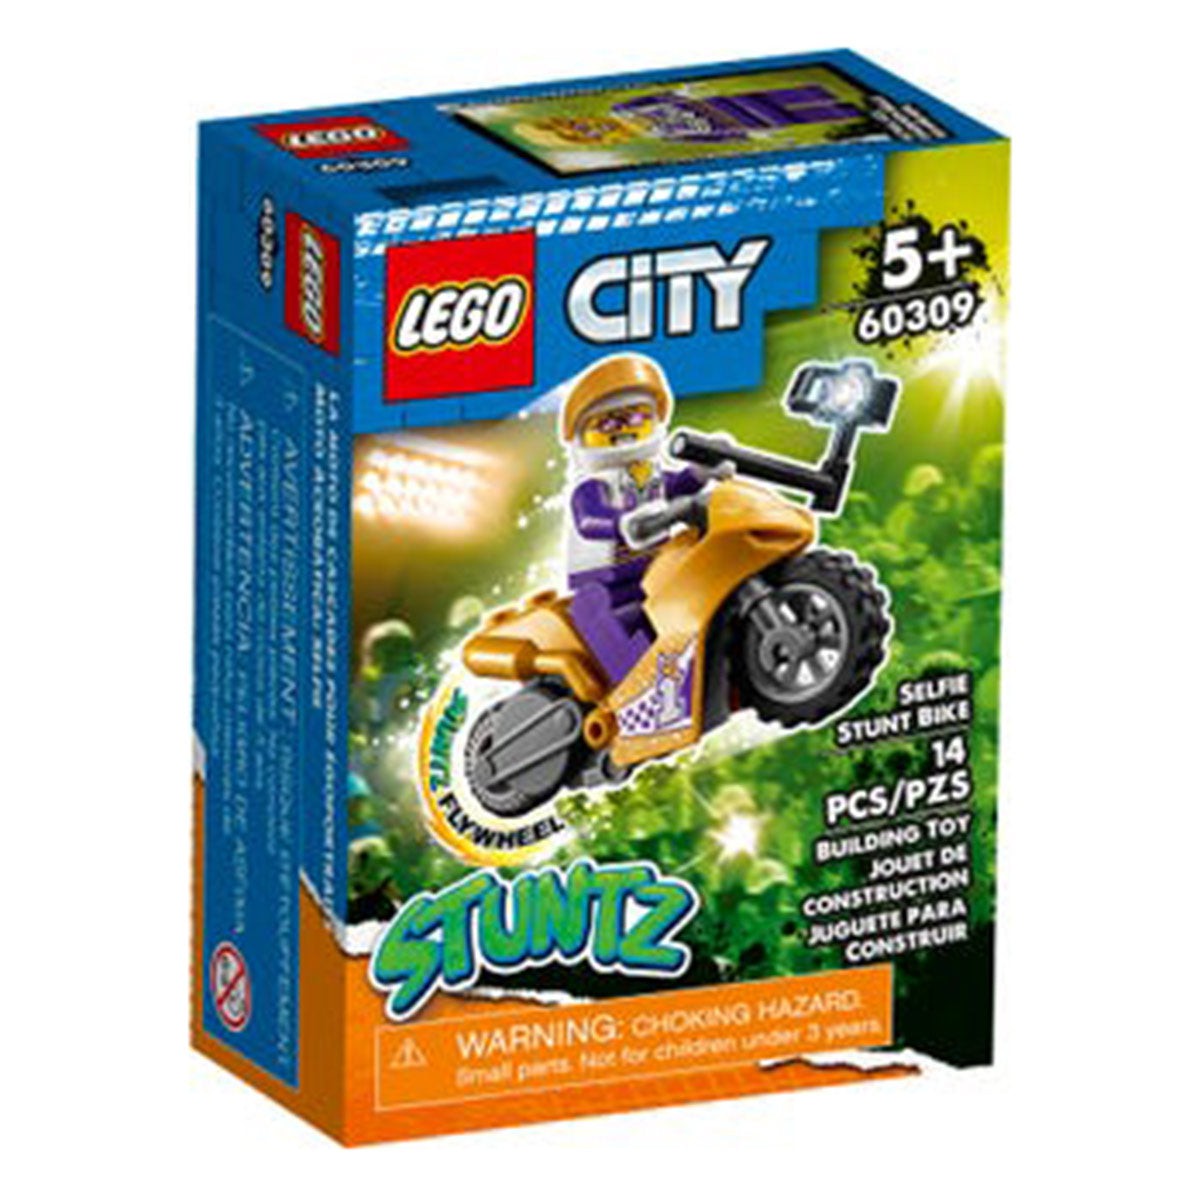 LEGO City Stuntz Selfie Stunt Bike, 60309, Ages 5+, 14 Pieces – Party Expert